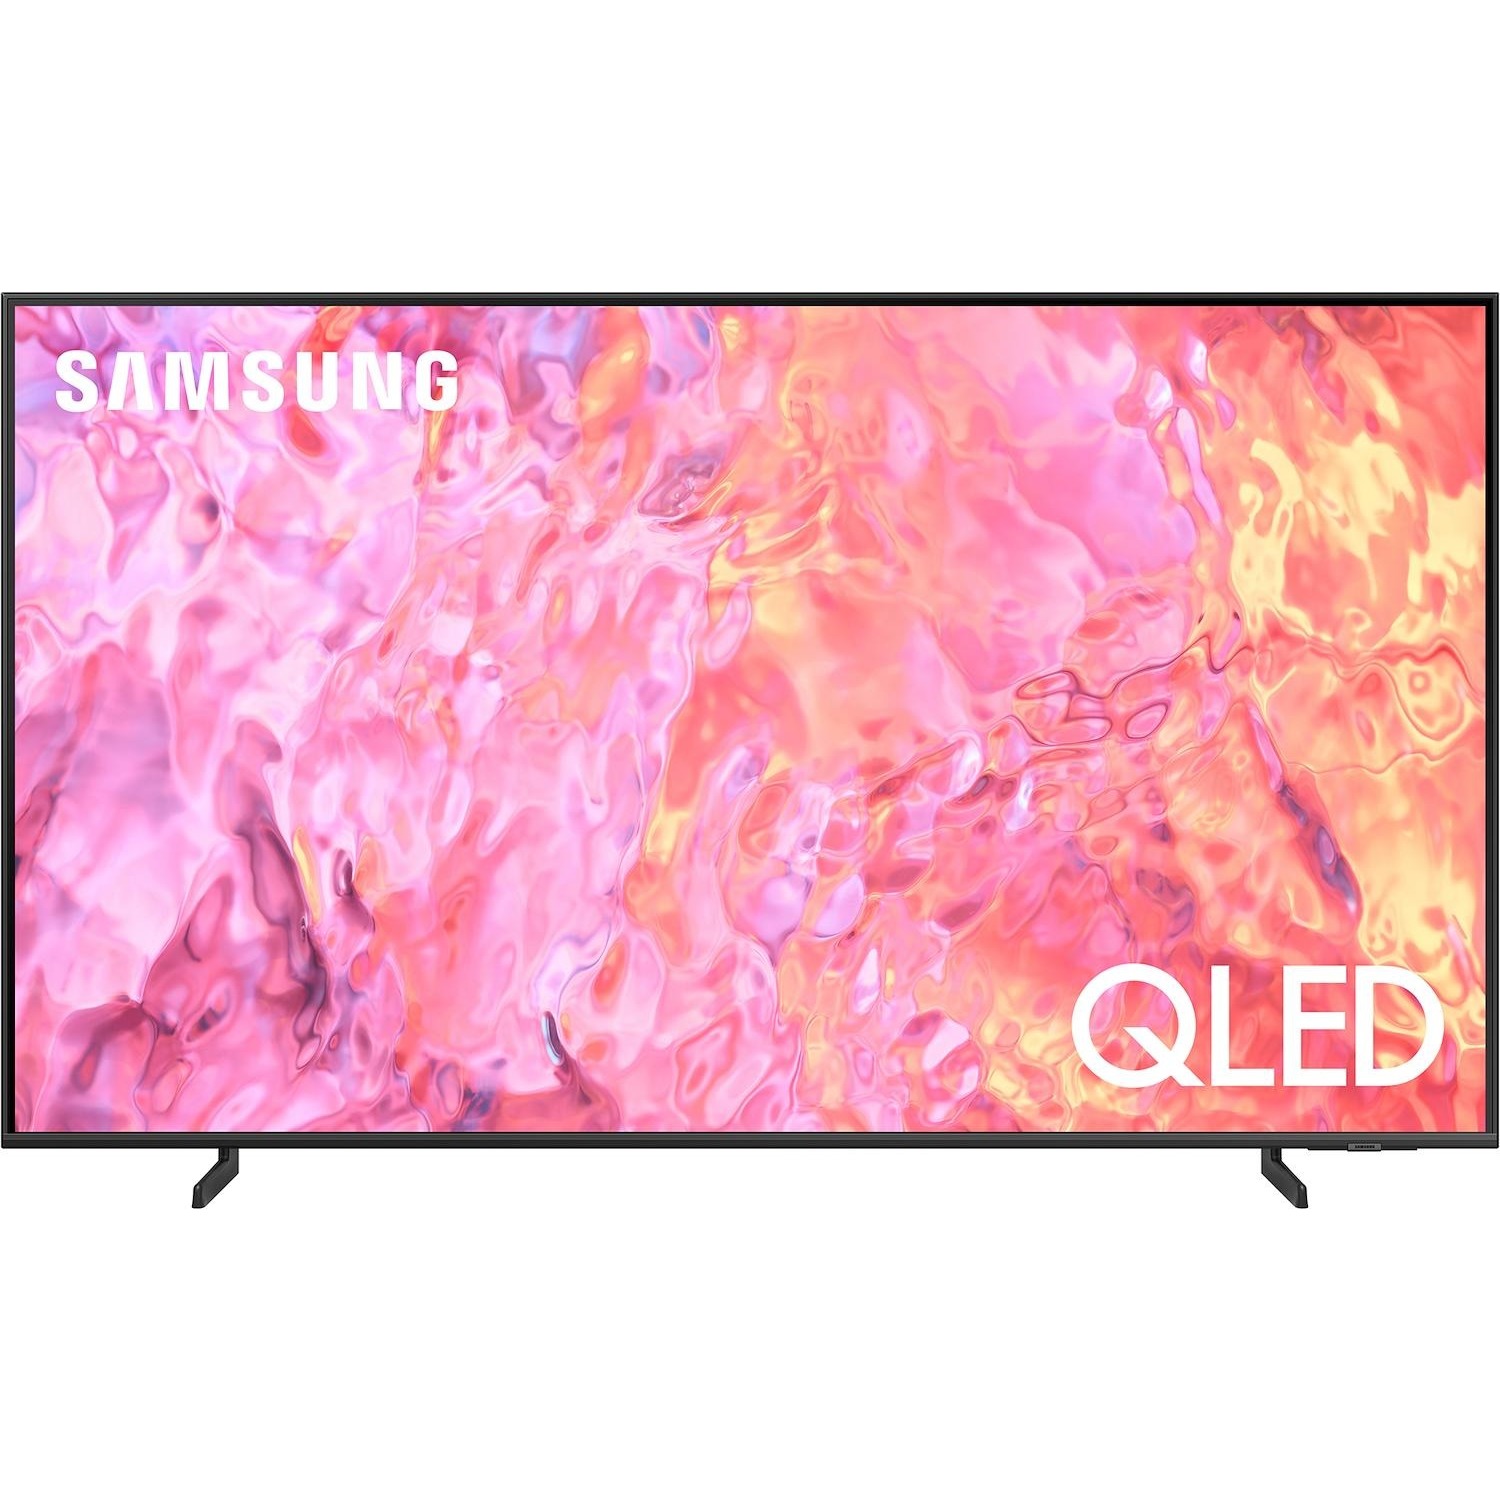 Immagine per TV LED Smart 4K UHD Samsung 50Q60C da DIMOStore